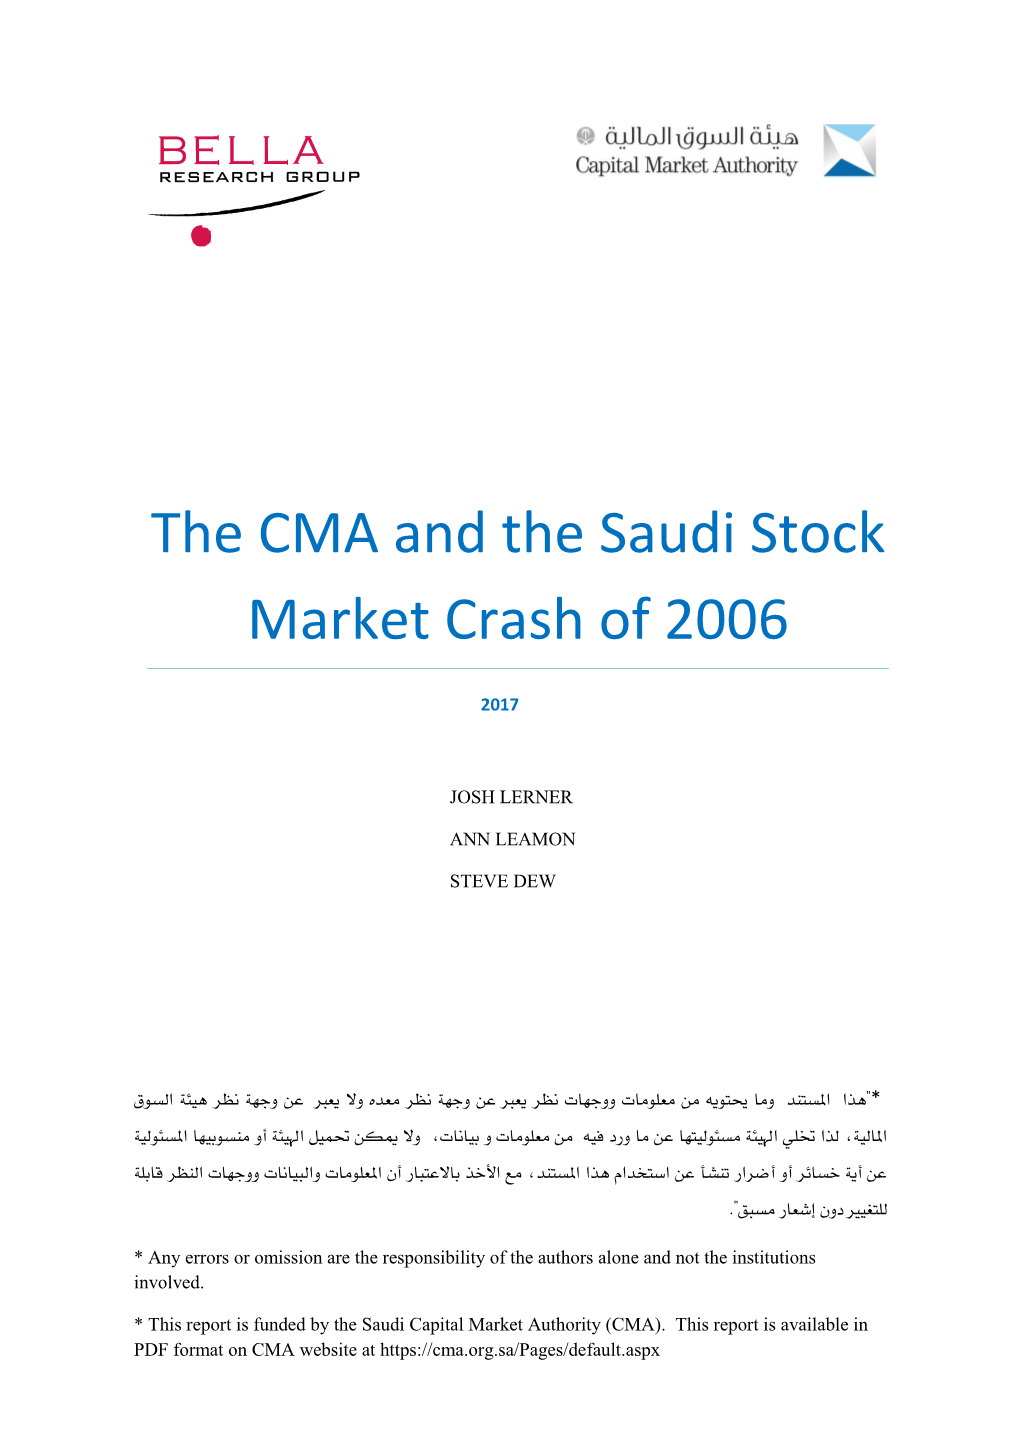 The CMA and the Saudi Stock Market Crash of 2006